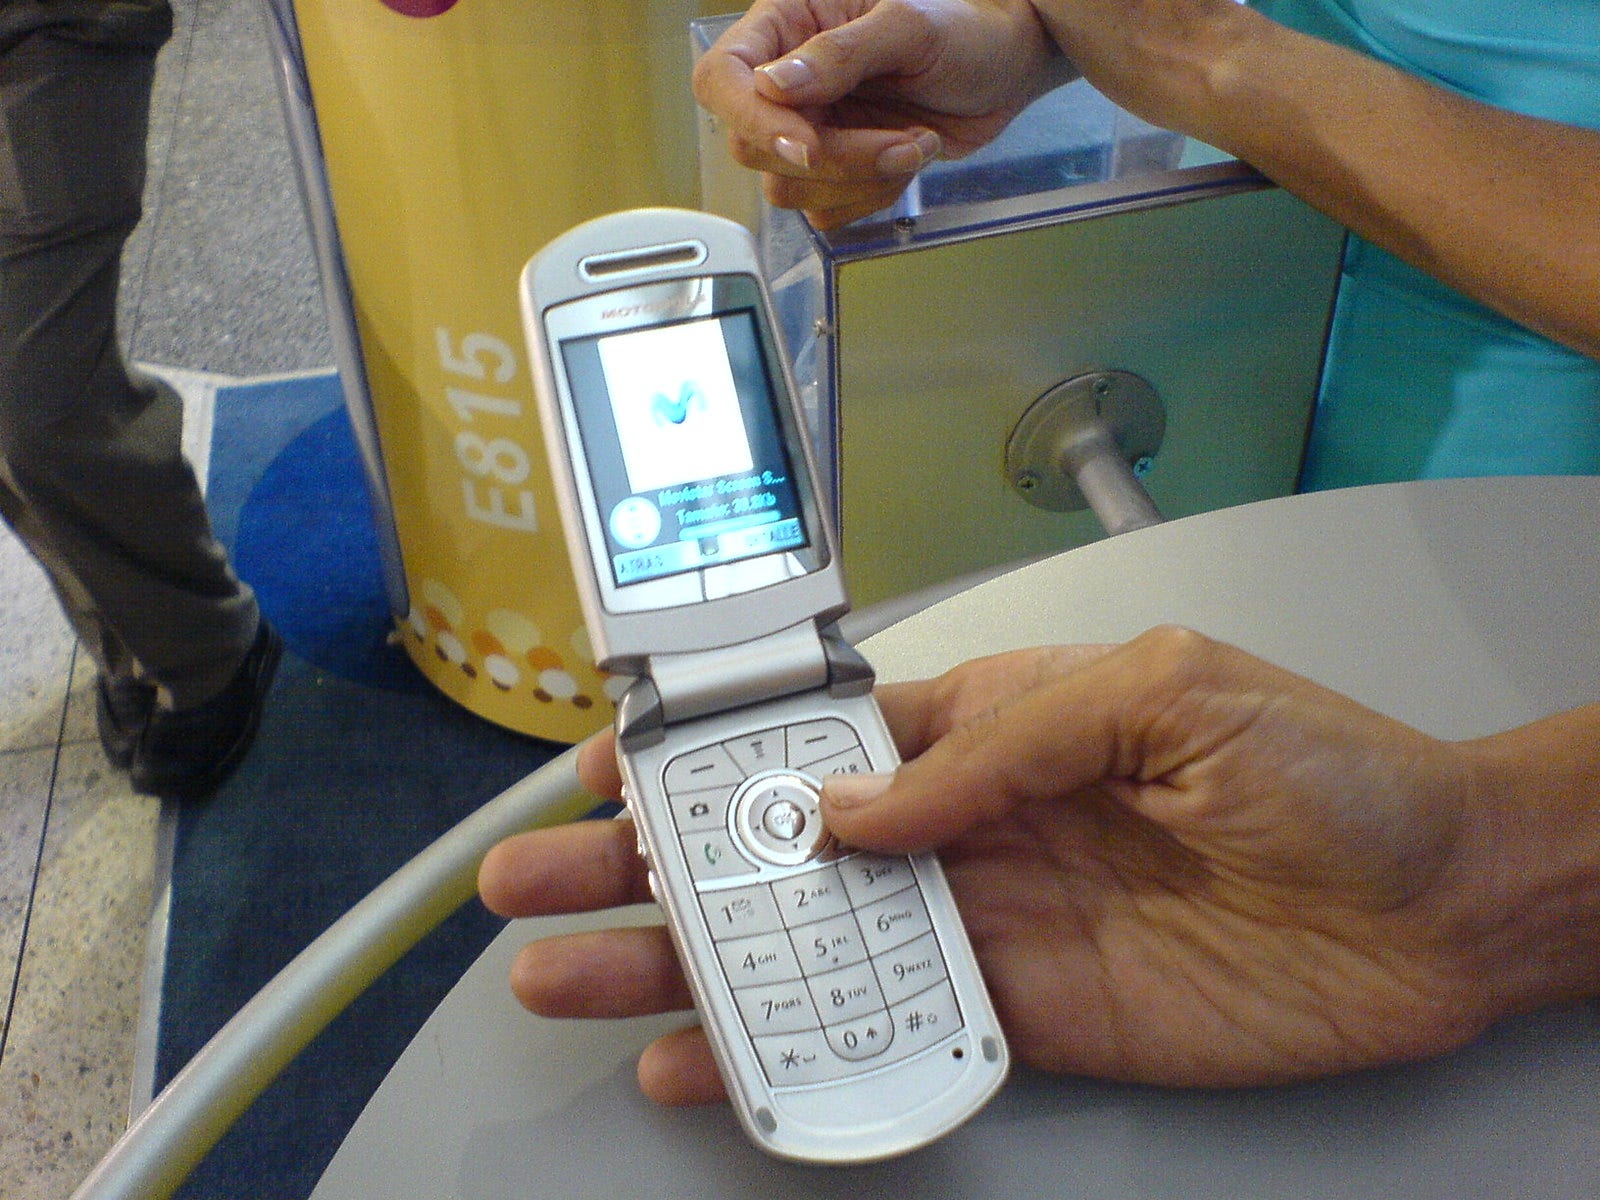 The Motorola E815